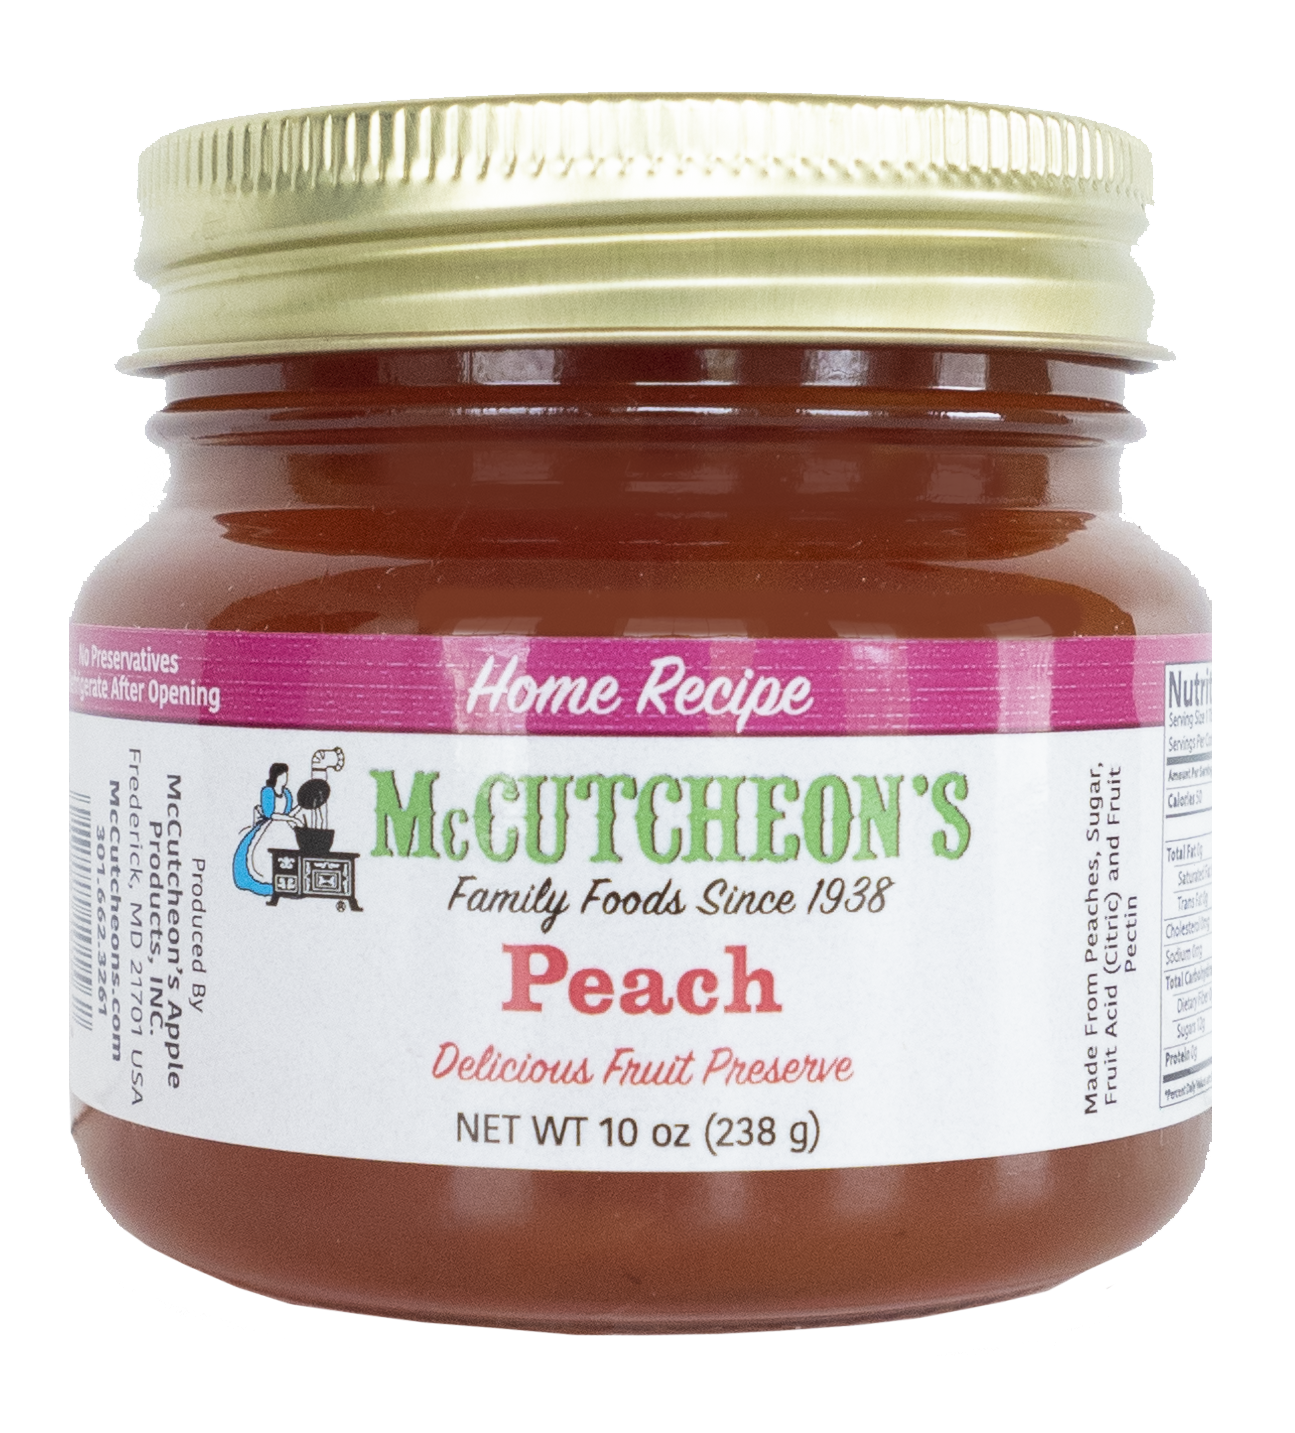 jar of McCutcheon's mini peach preserves